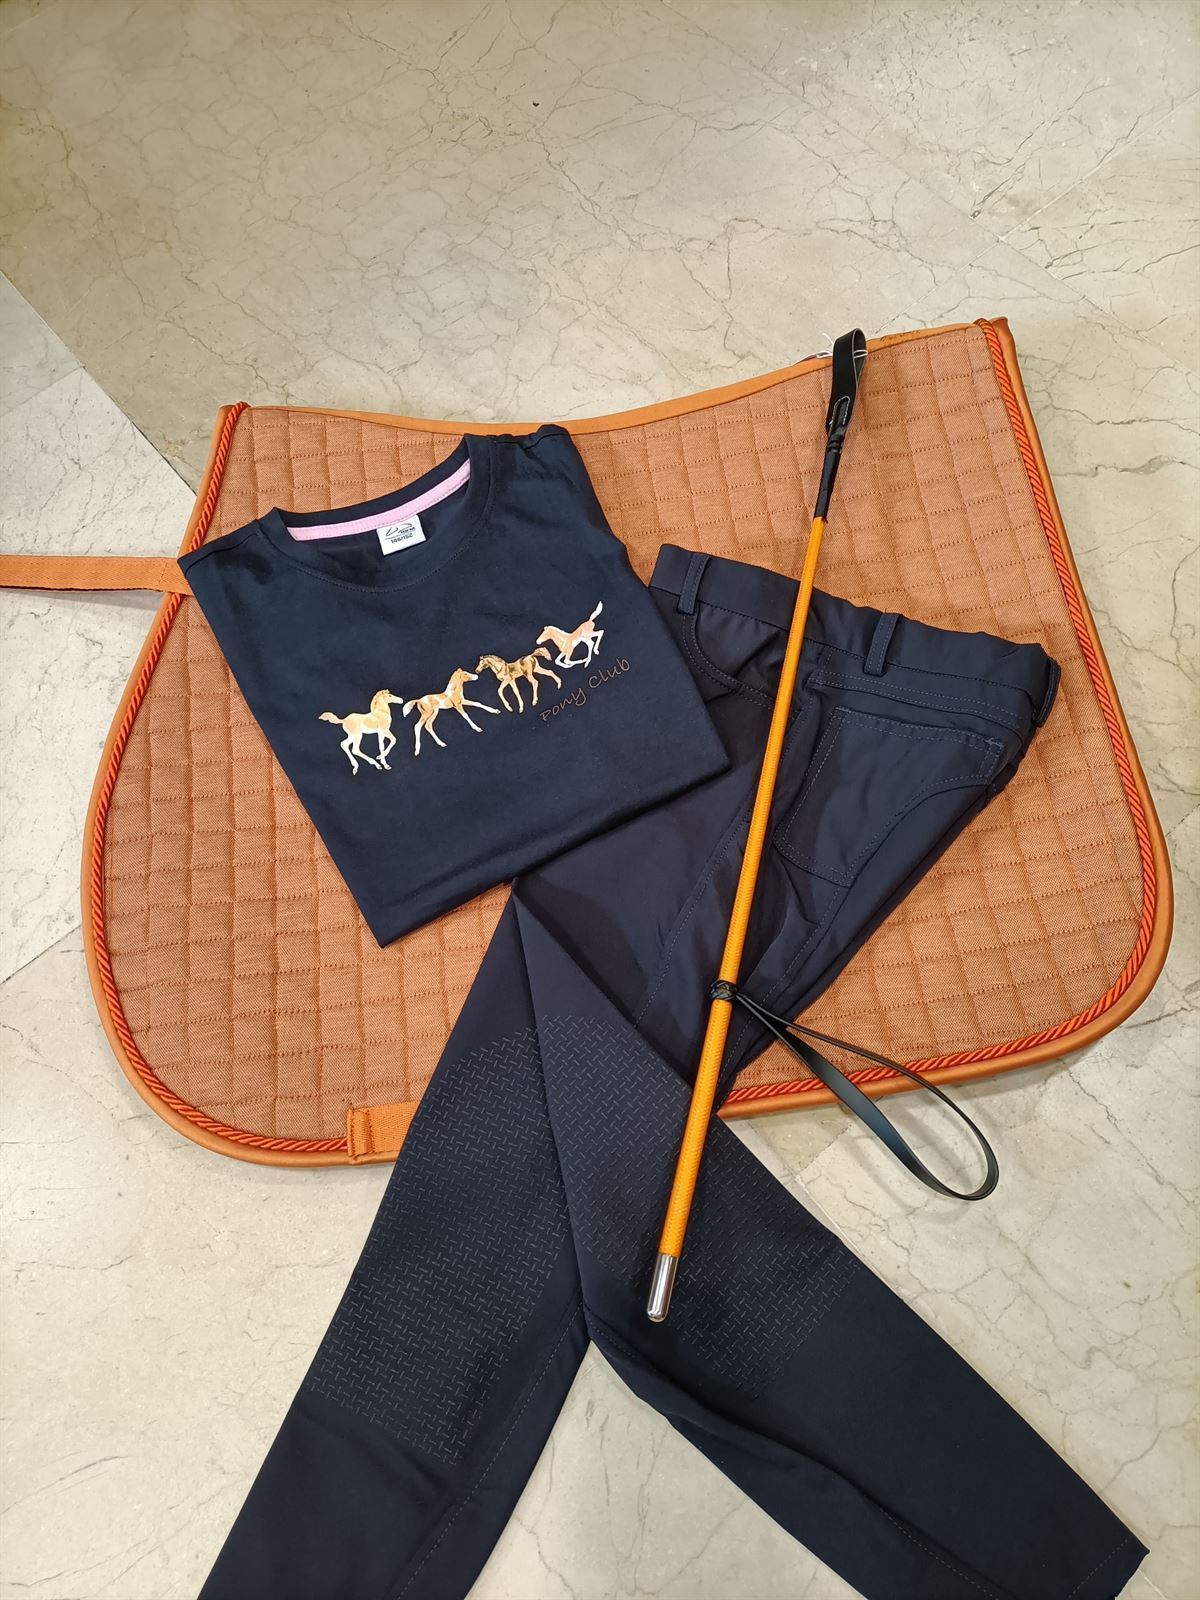 Pantalón unisex HKM Sports Equipment Sunshine color azul marino, rodilla silicona, tallaje infantil - Imagen 4